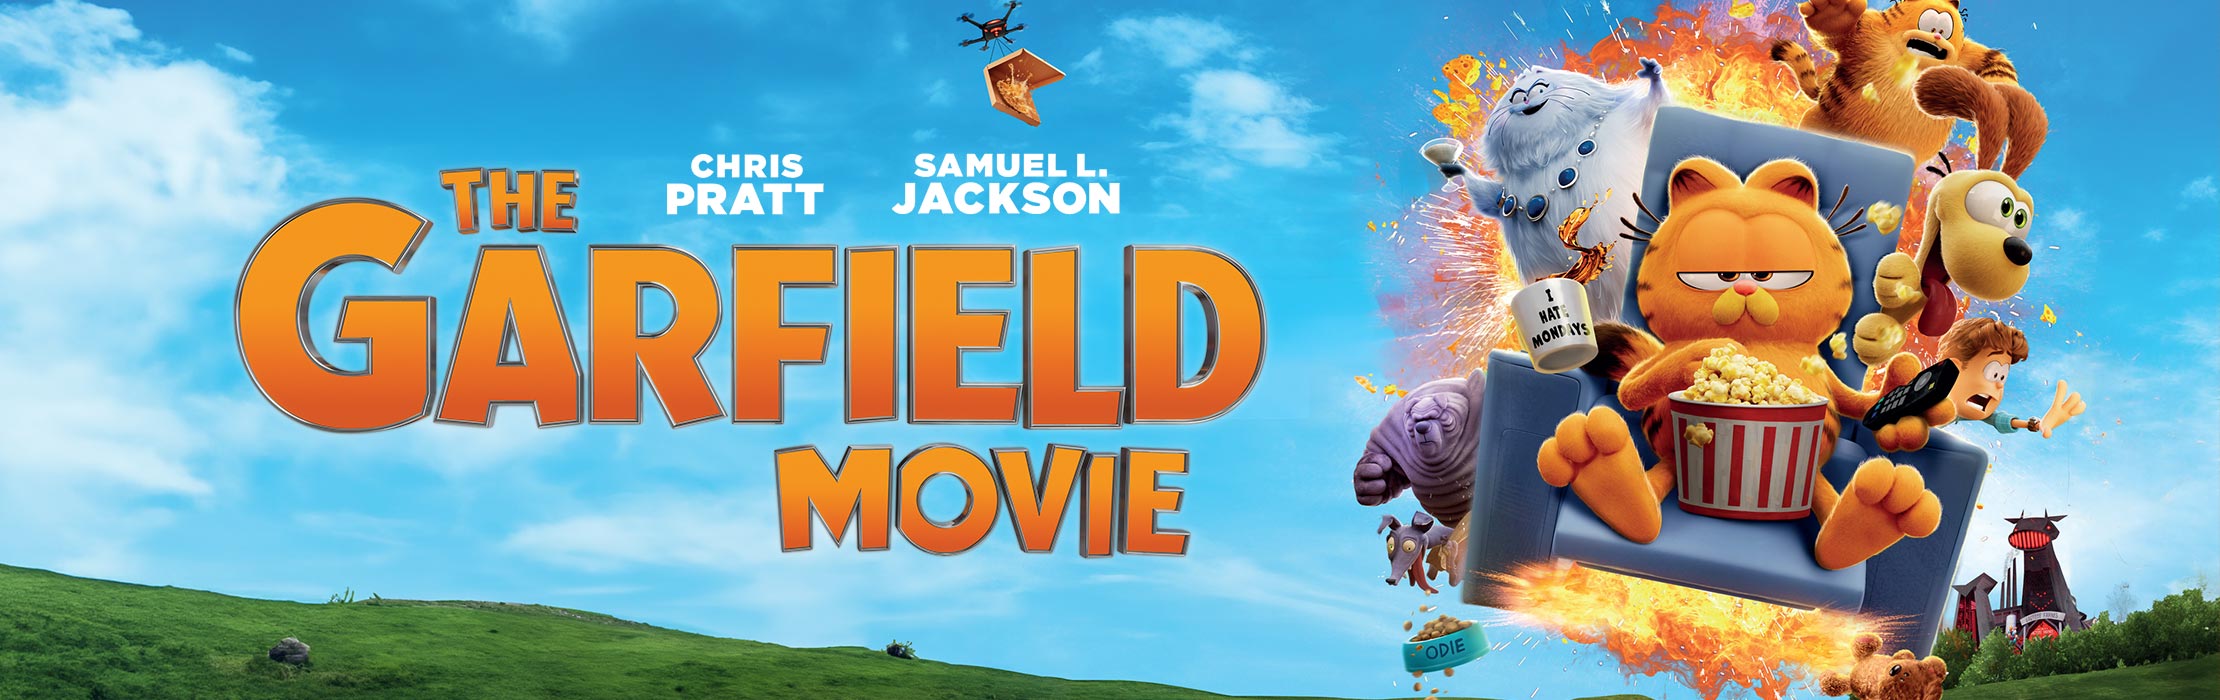 /film/The-Garfield-Movie-MediCinema